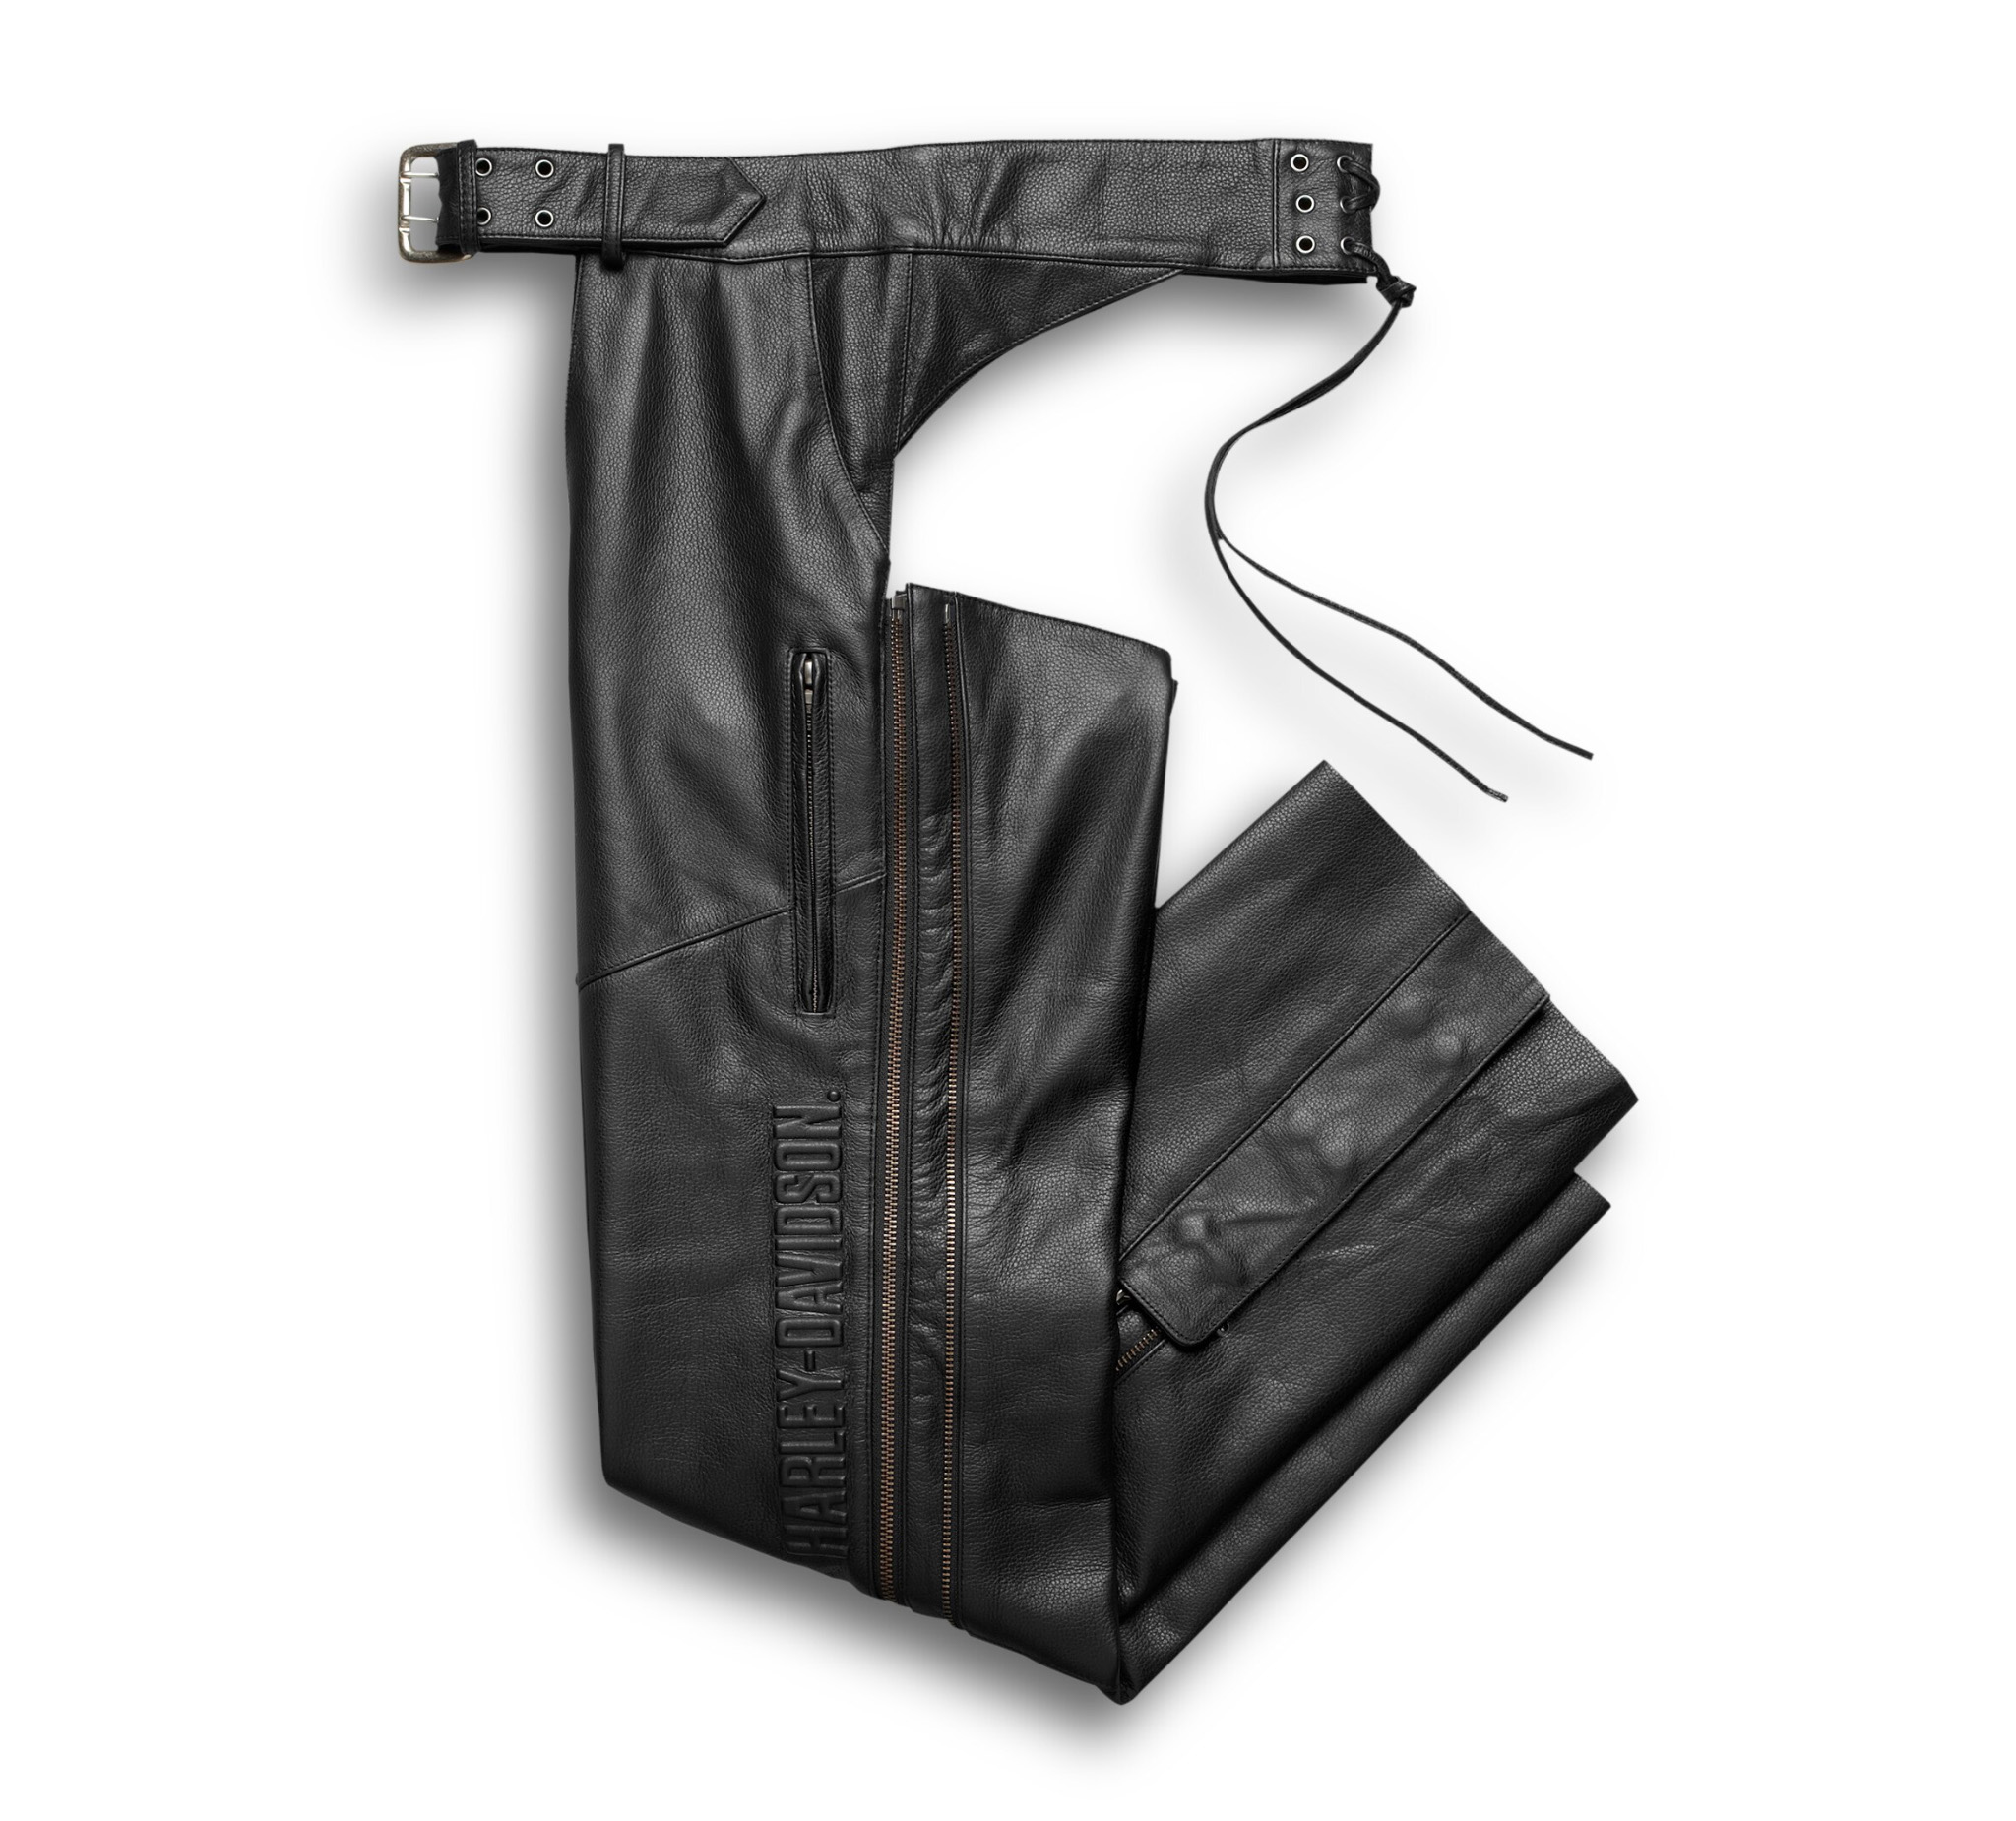 Harley Davidson Leather Pants Size 14 Black Leather Pants L Large -   Australia